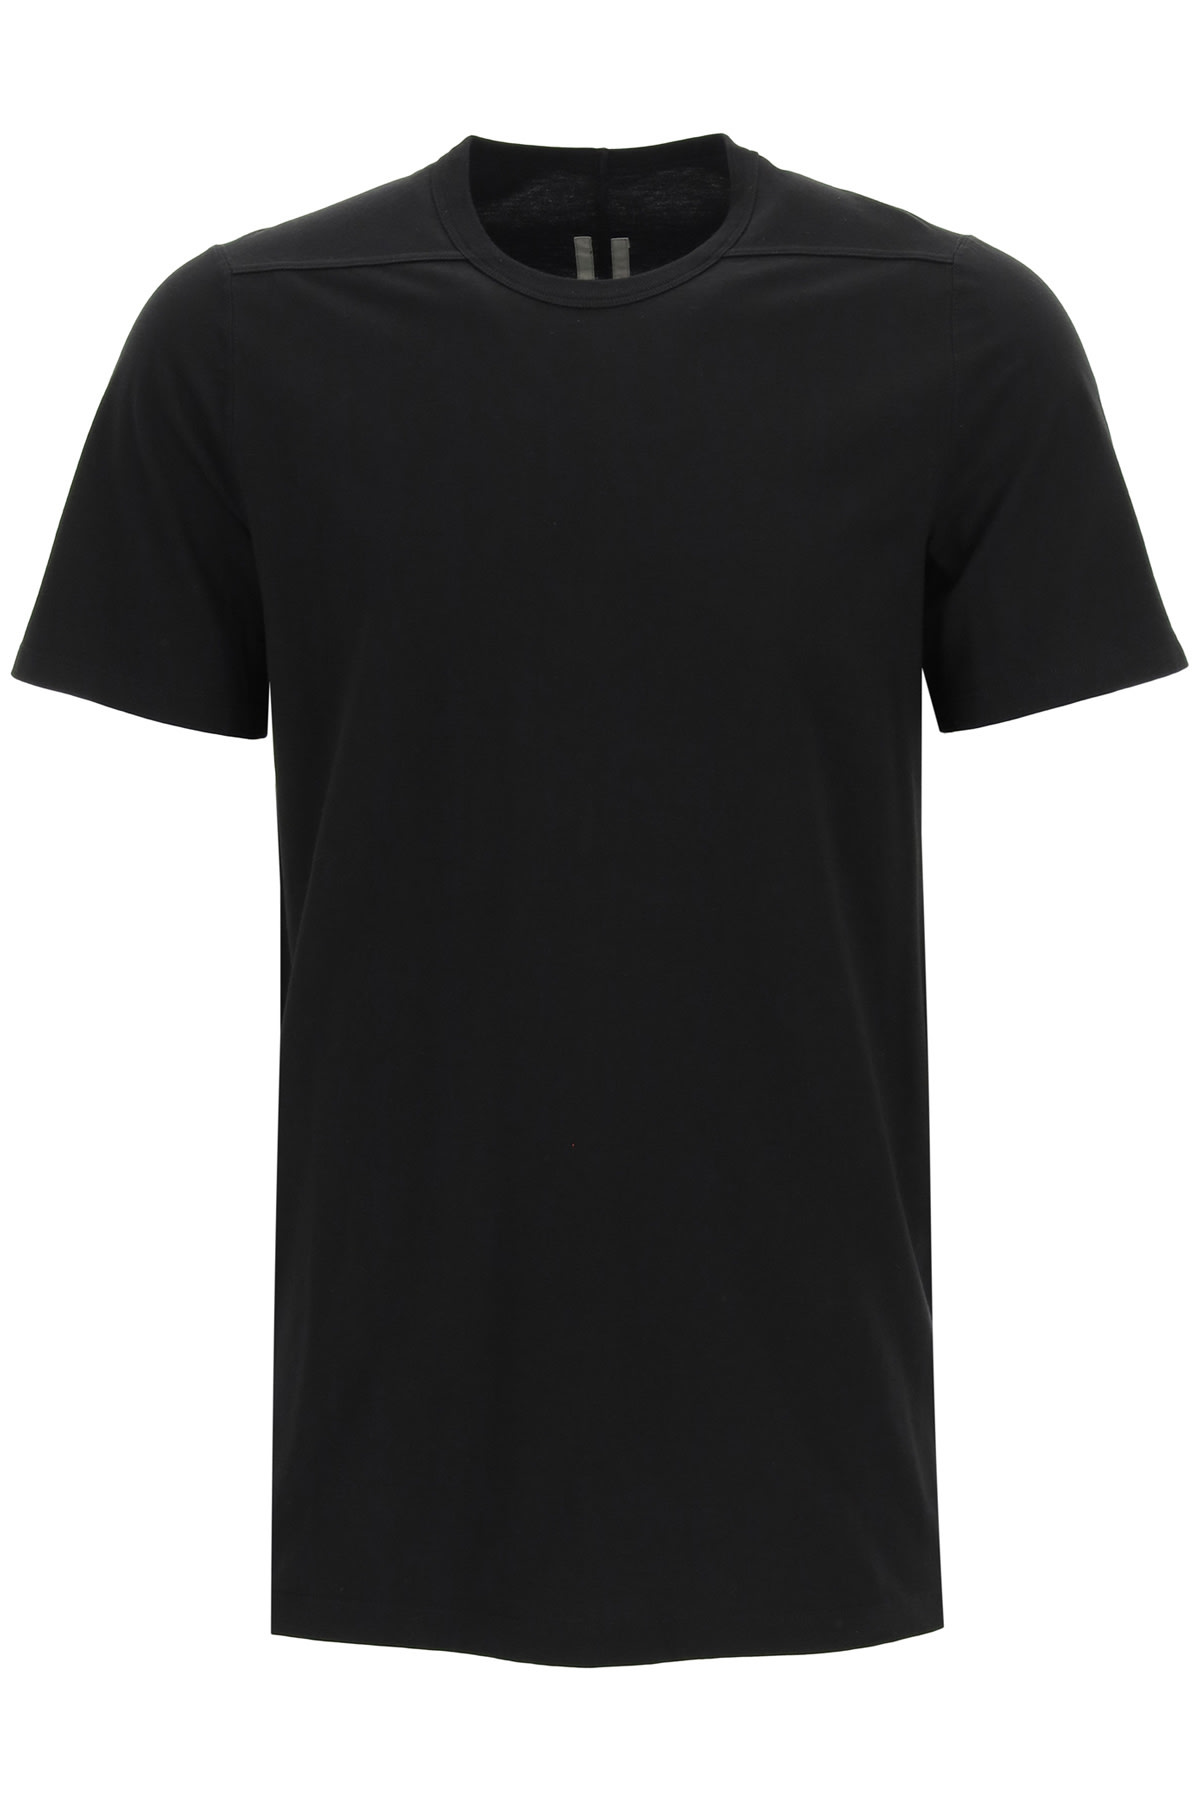 Rick Owens Gethsemane Level T T-shirt